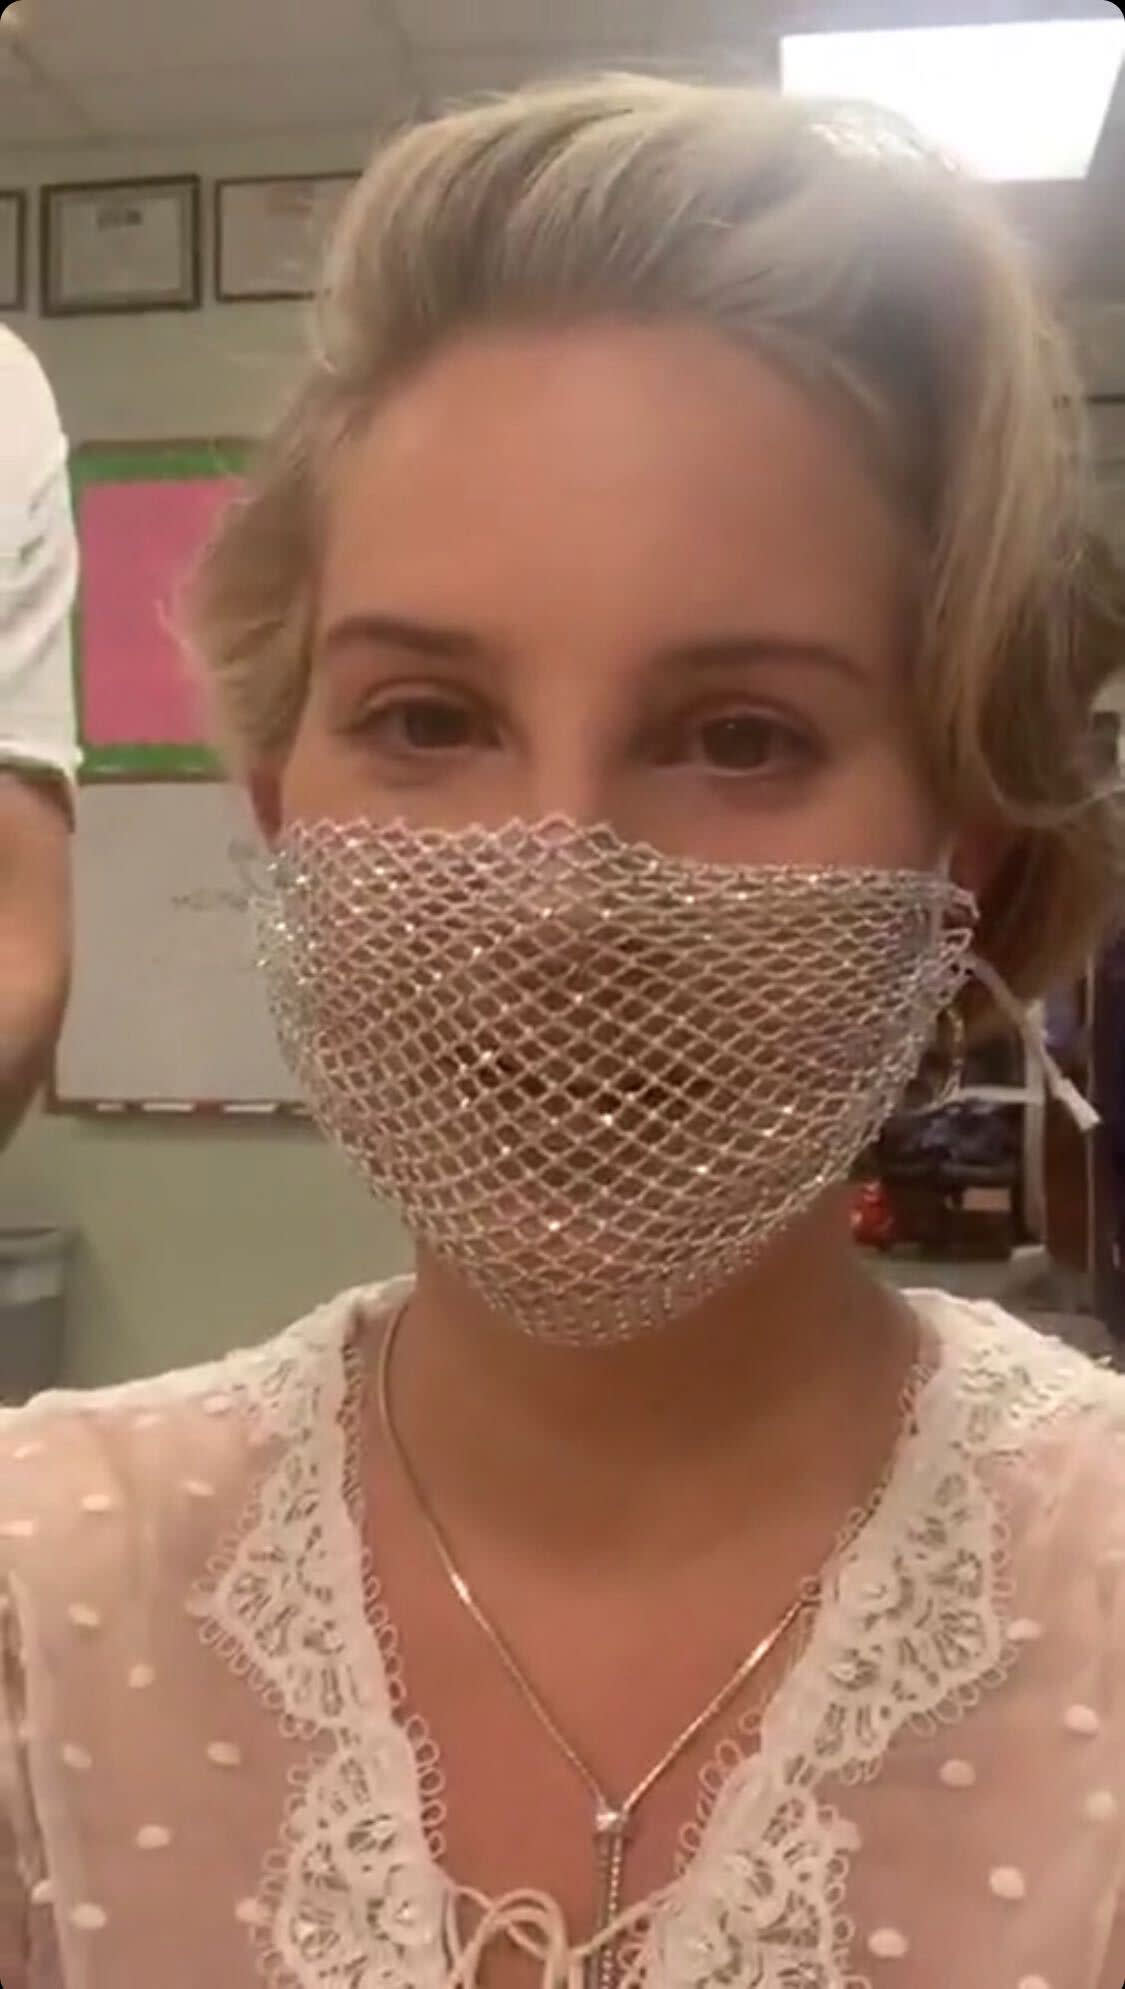 Lana Del Rey responds to backlash after wearing mesh face mask